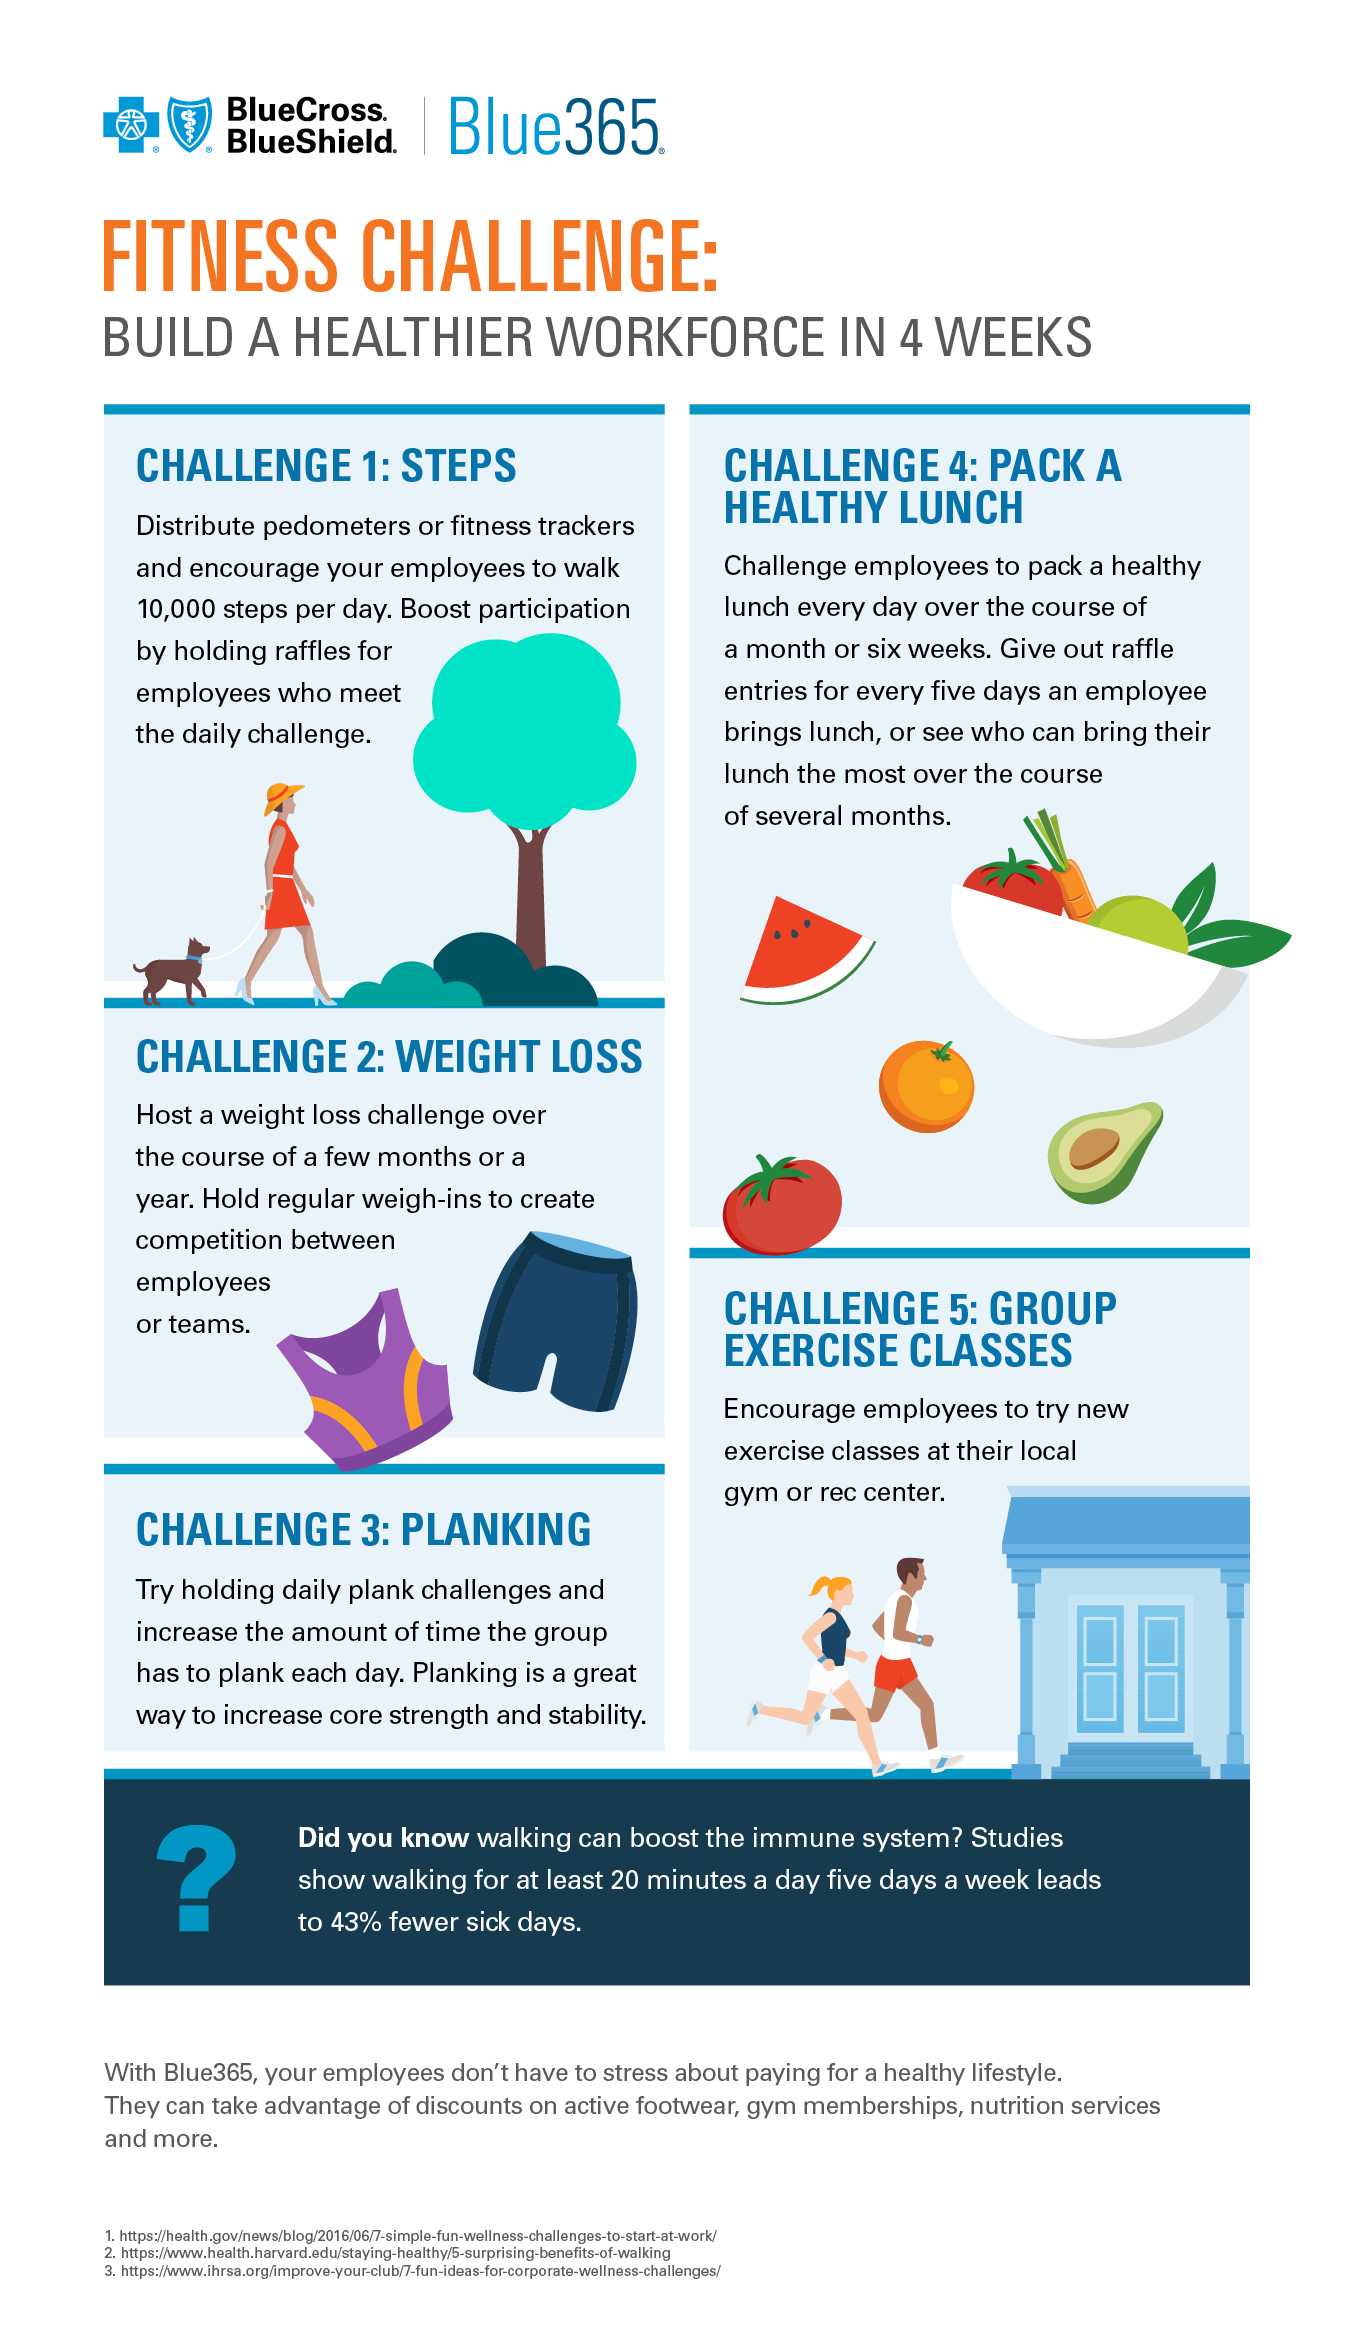 5 surprising benefits of walking - Harvard Health